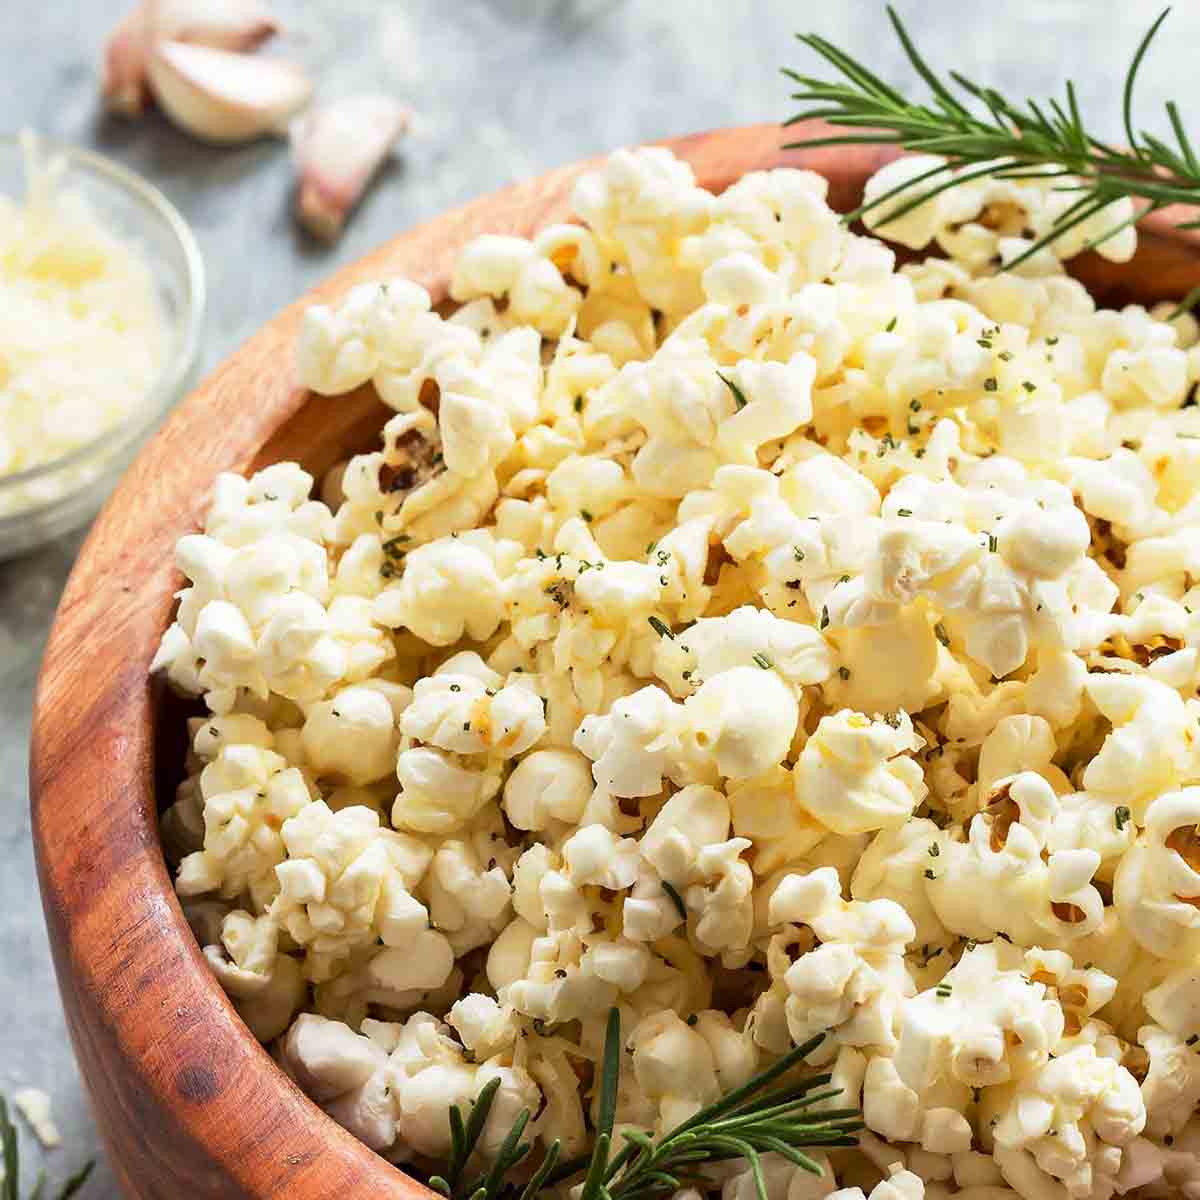 Garlic Parmesan Rosemary Popcorn